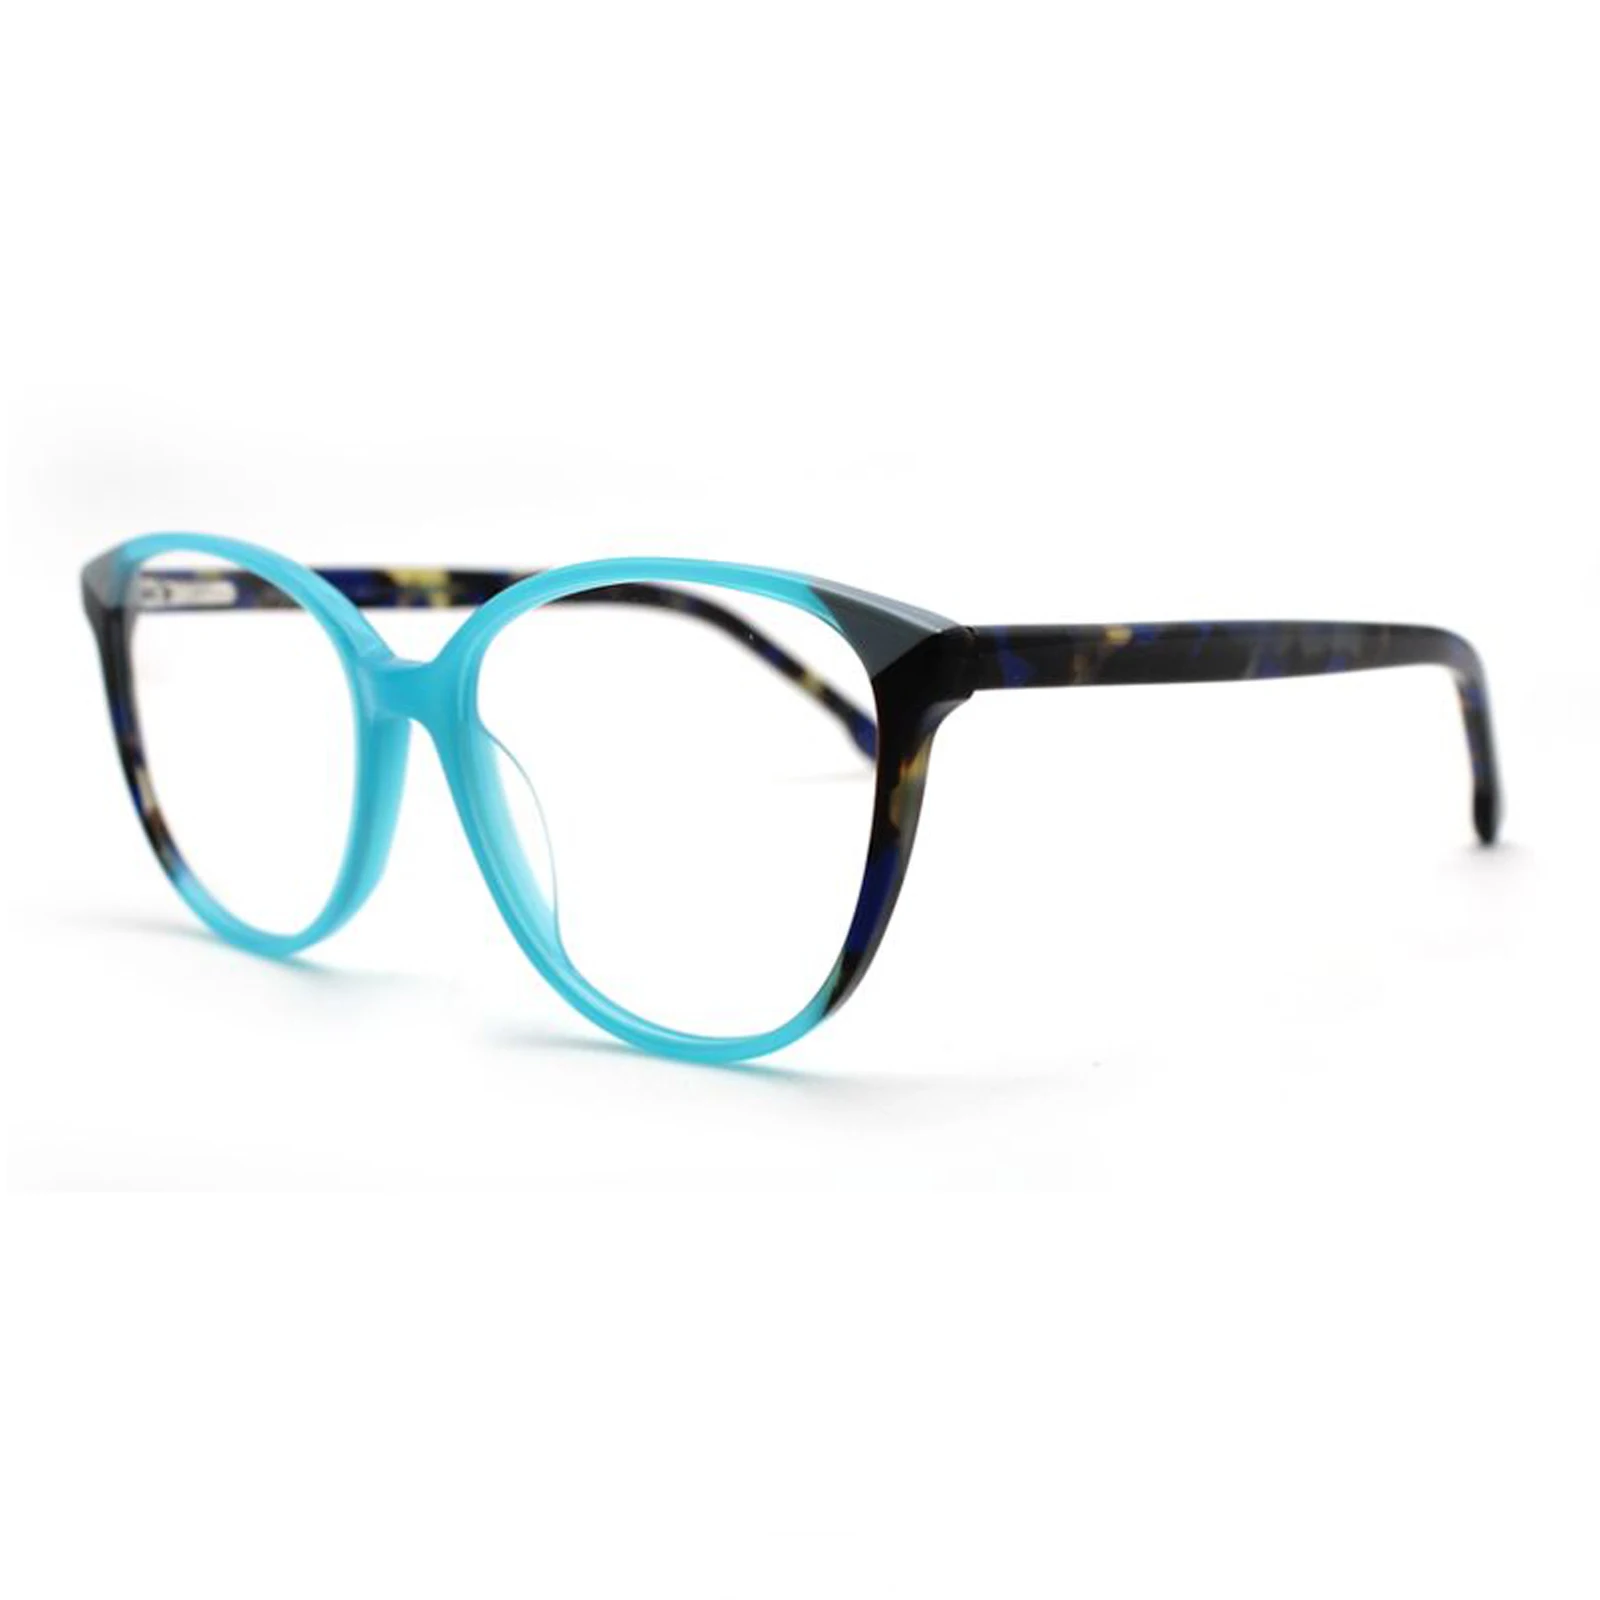 2021 New Custom Classic Laminated Acetate Glasses Acetate Eyeglasses Frames Ready To Ship For Women